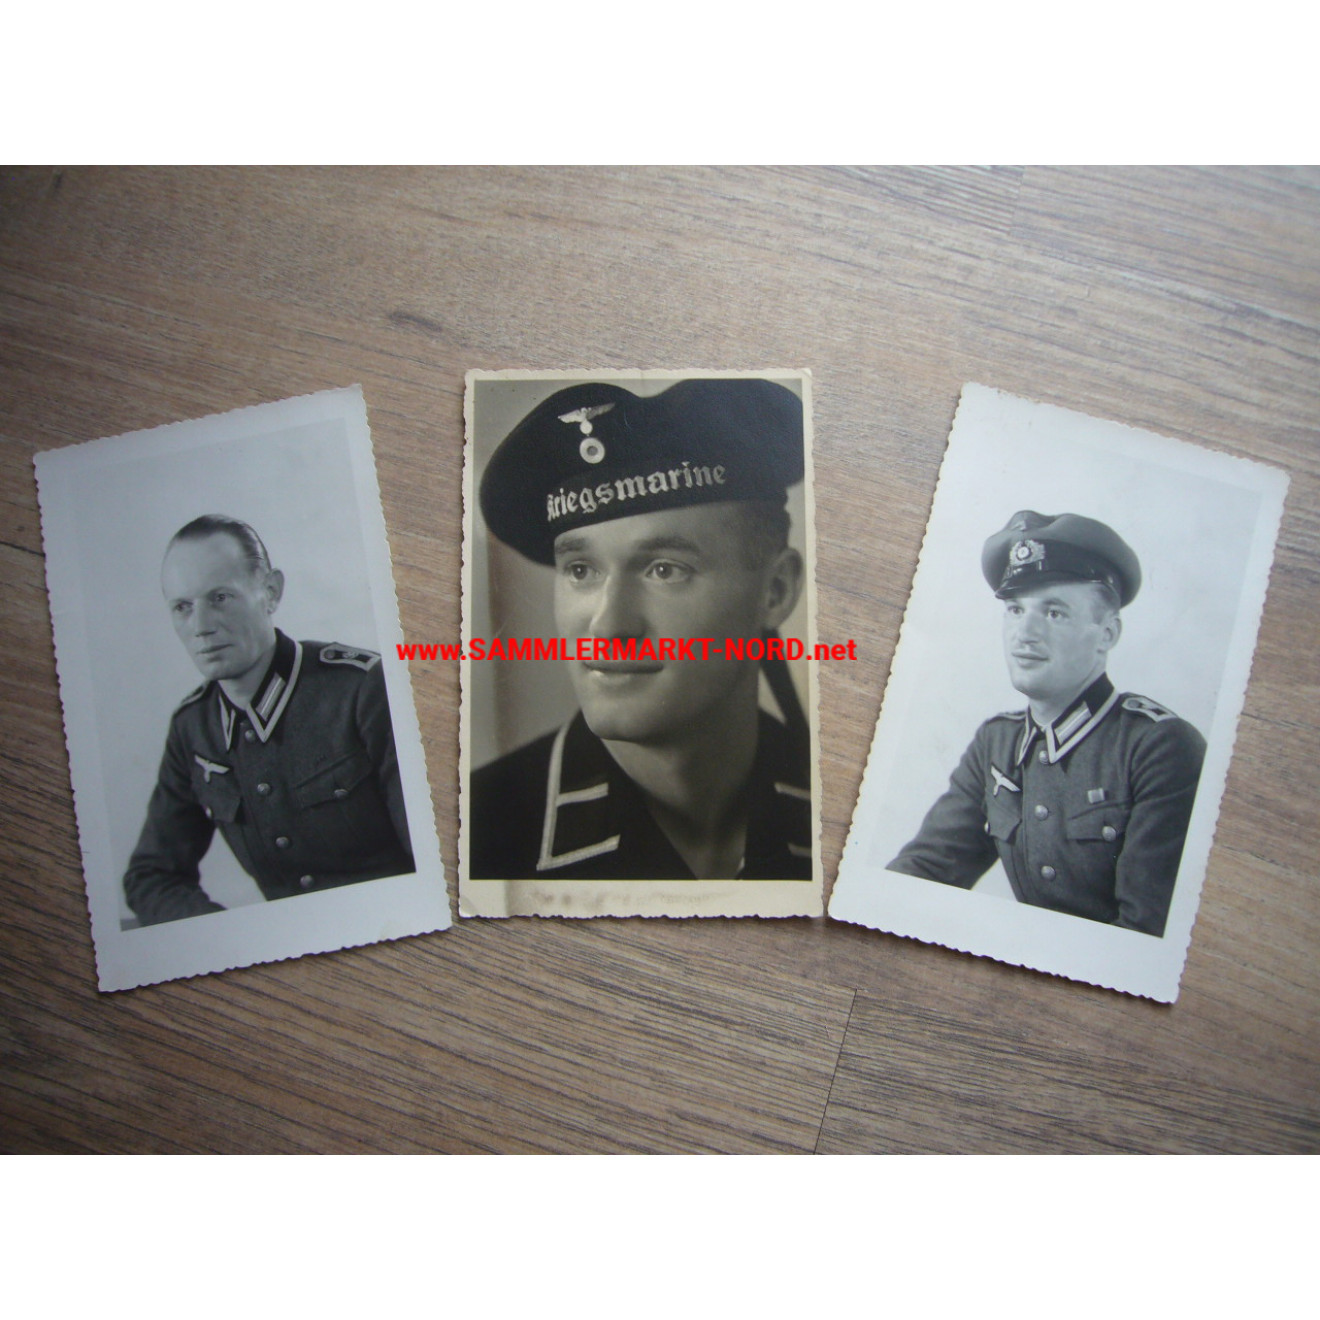 3 x Kriegsmarine portrait photo - same person